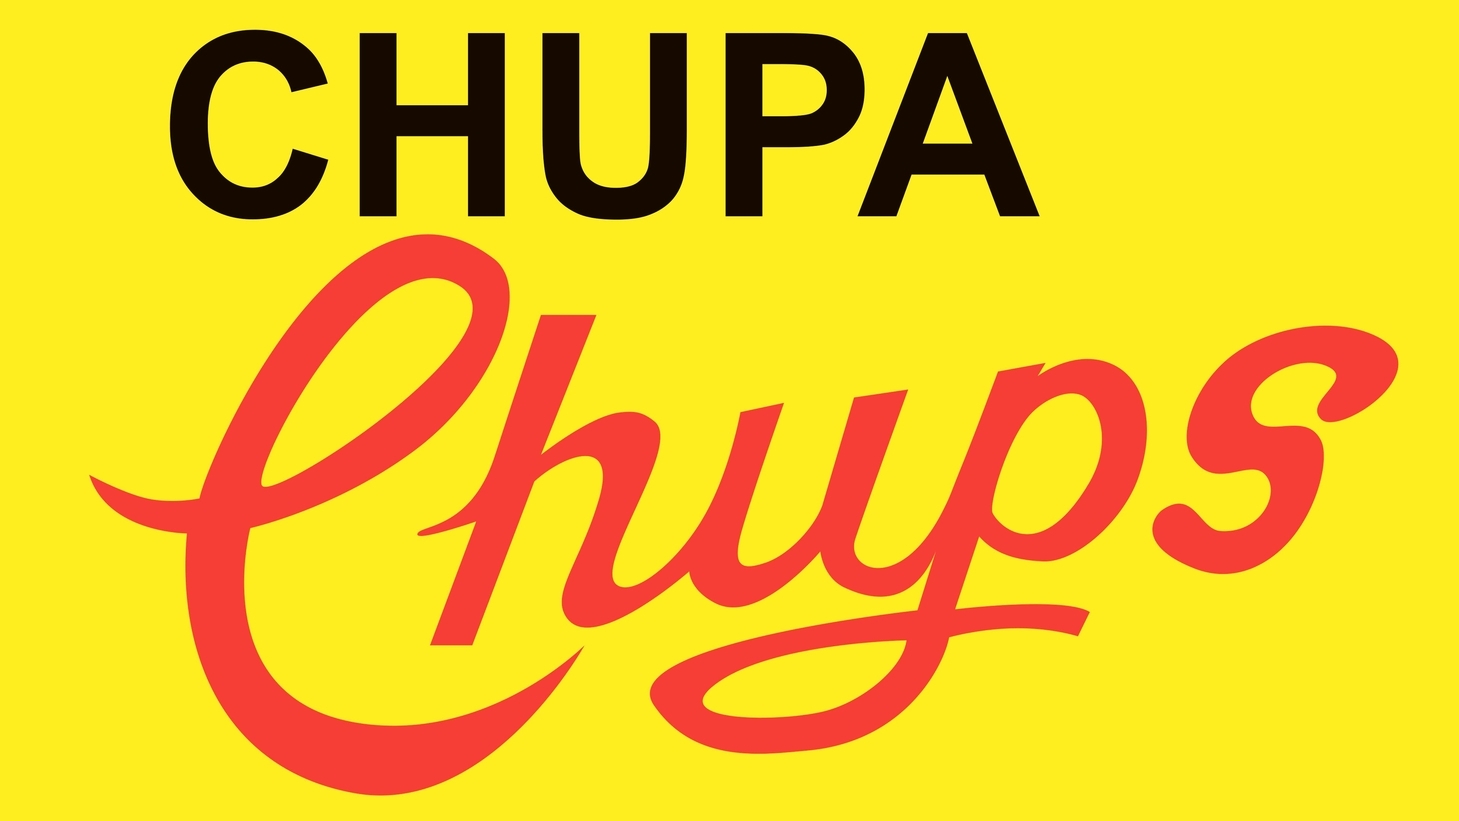 Chupa chups sign 1961 1963